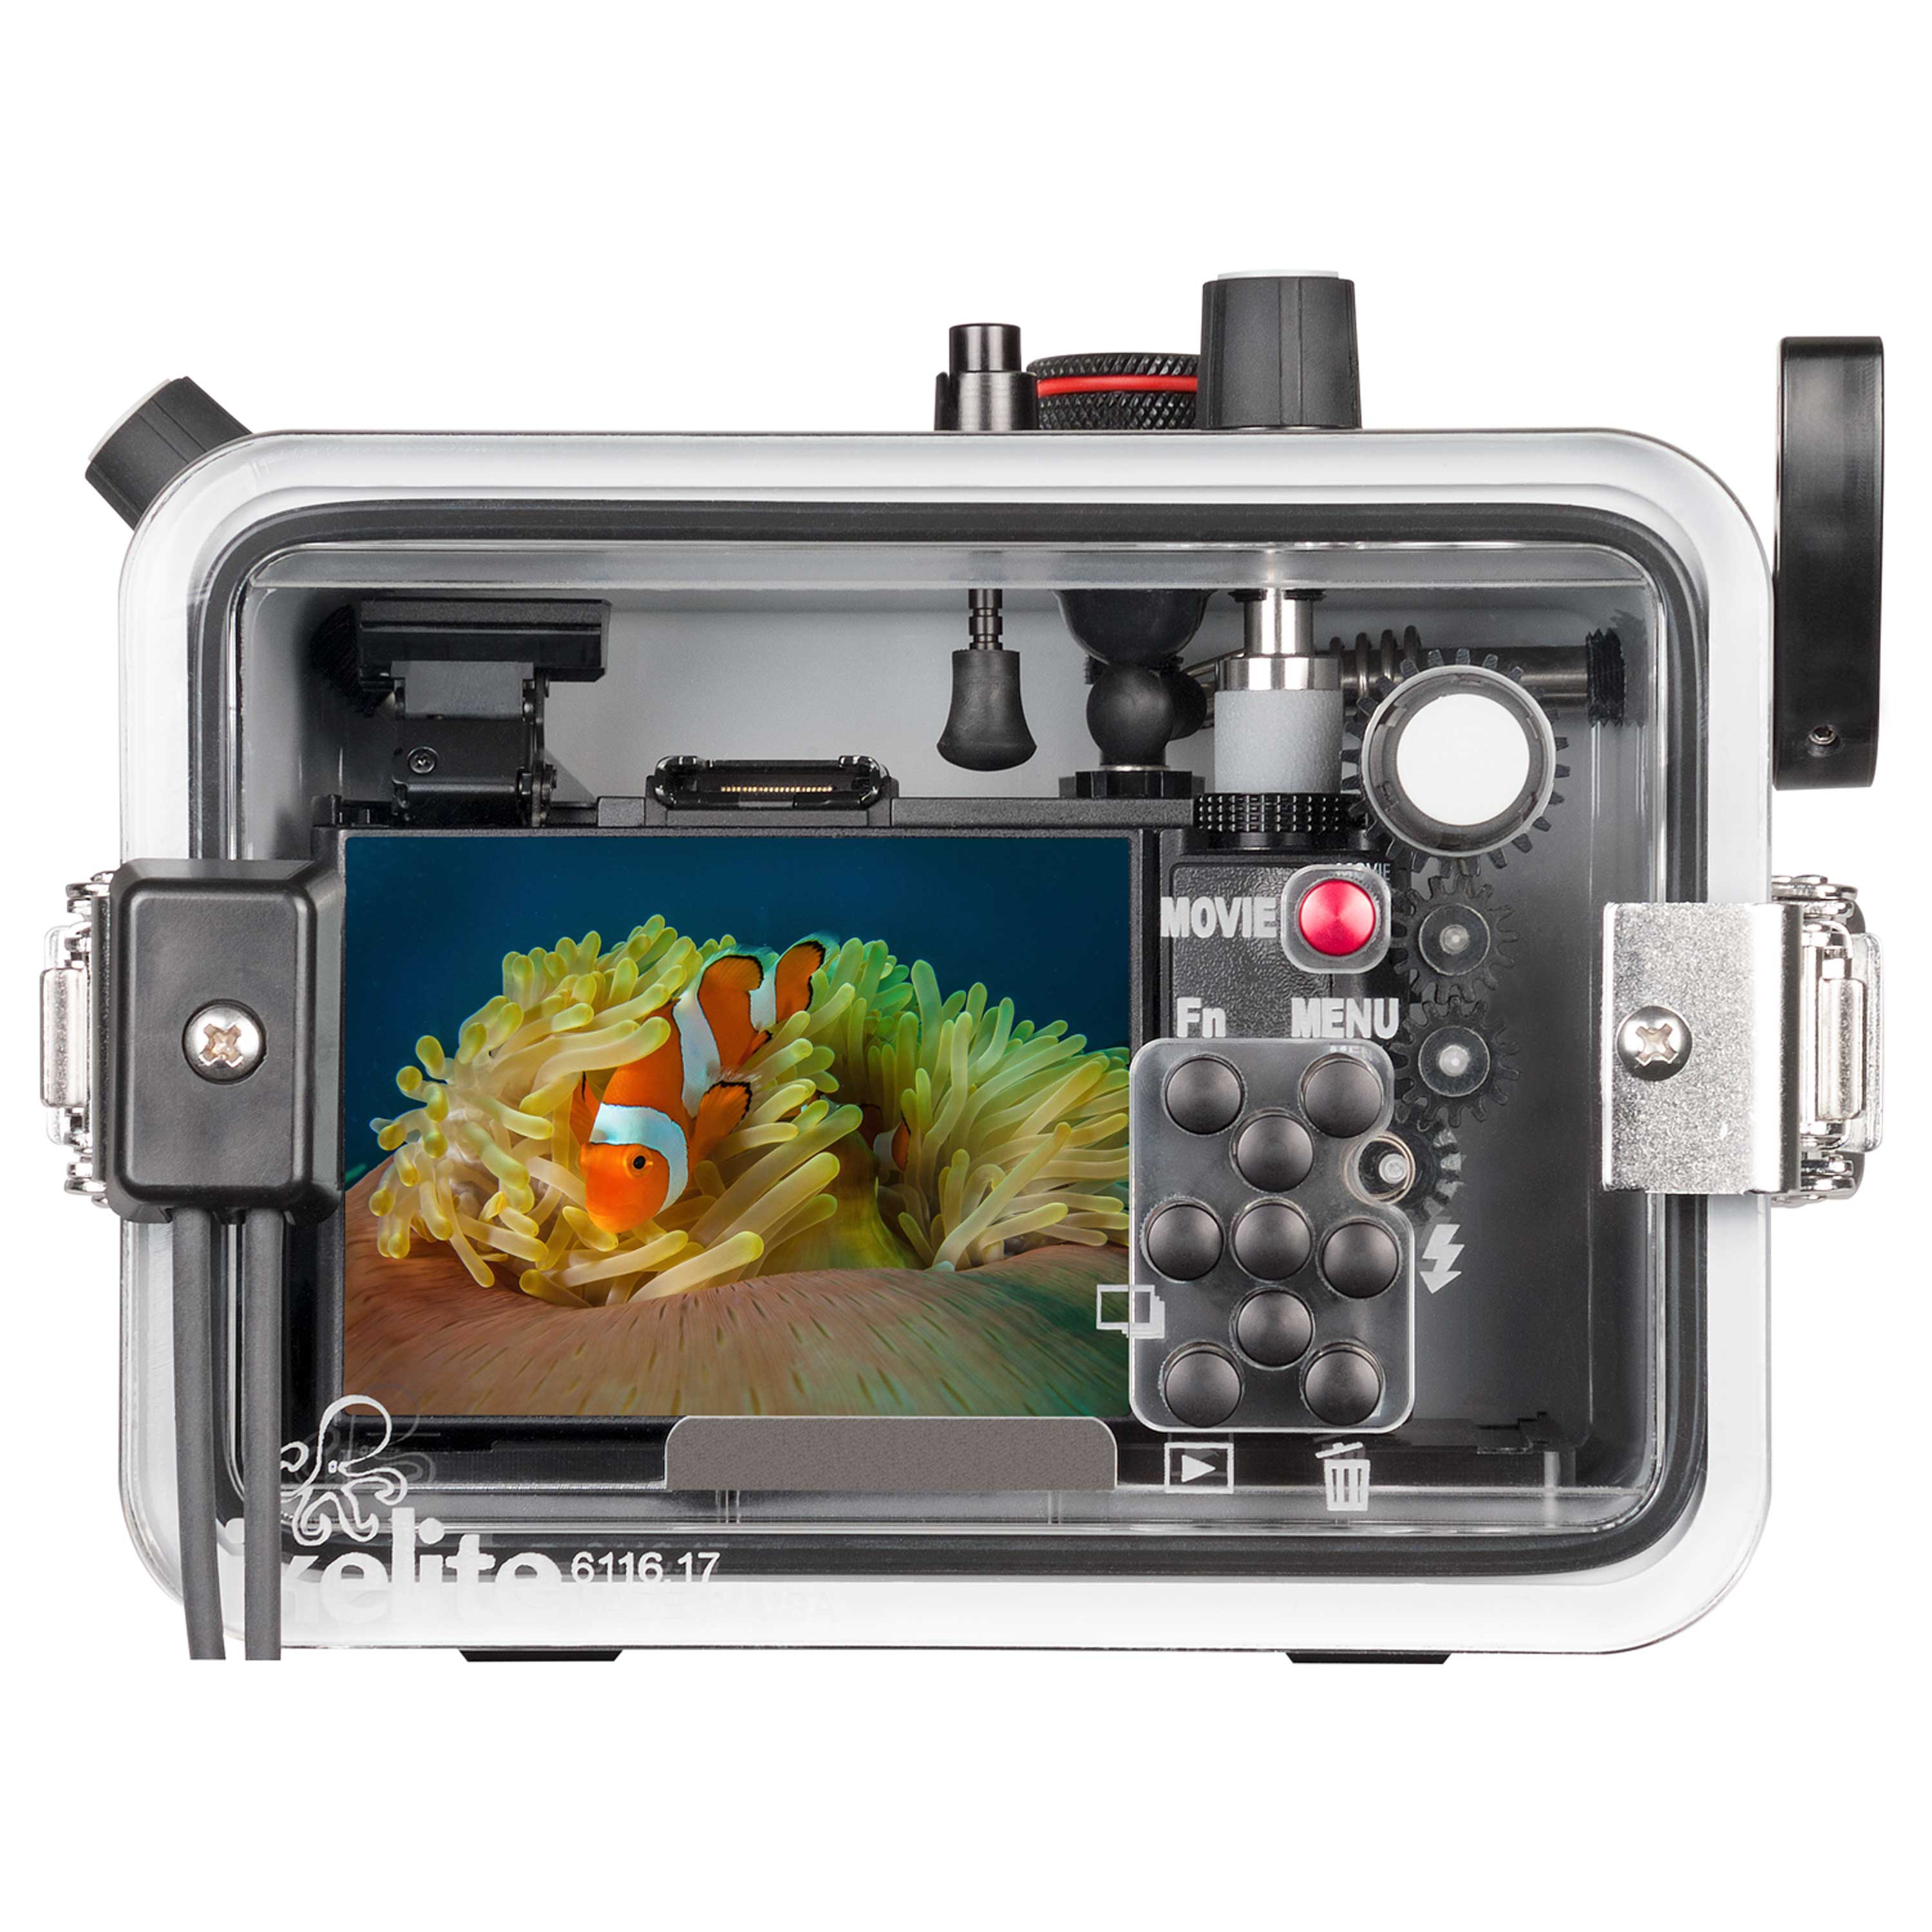 Underwater Housing for Sony Cyber-shot RX100 Mark I, RX100 Mark II Digital Cameras